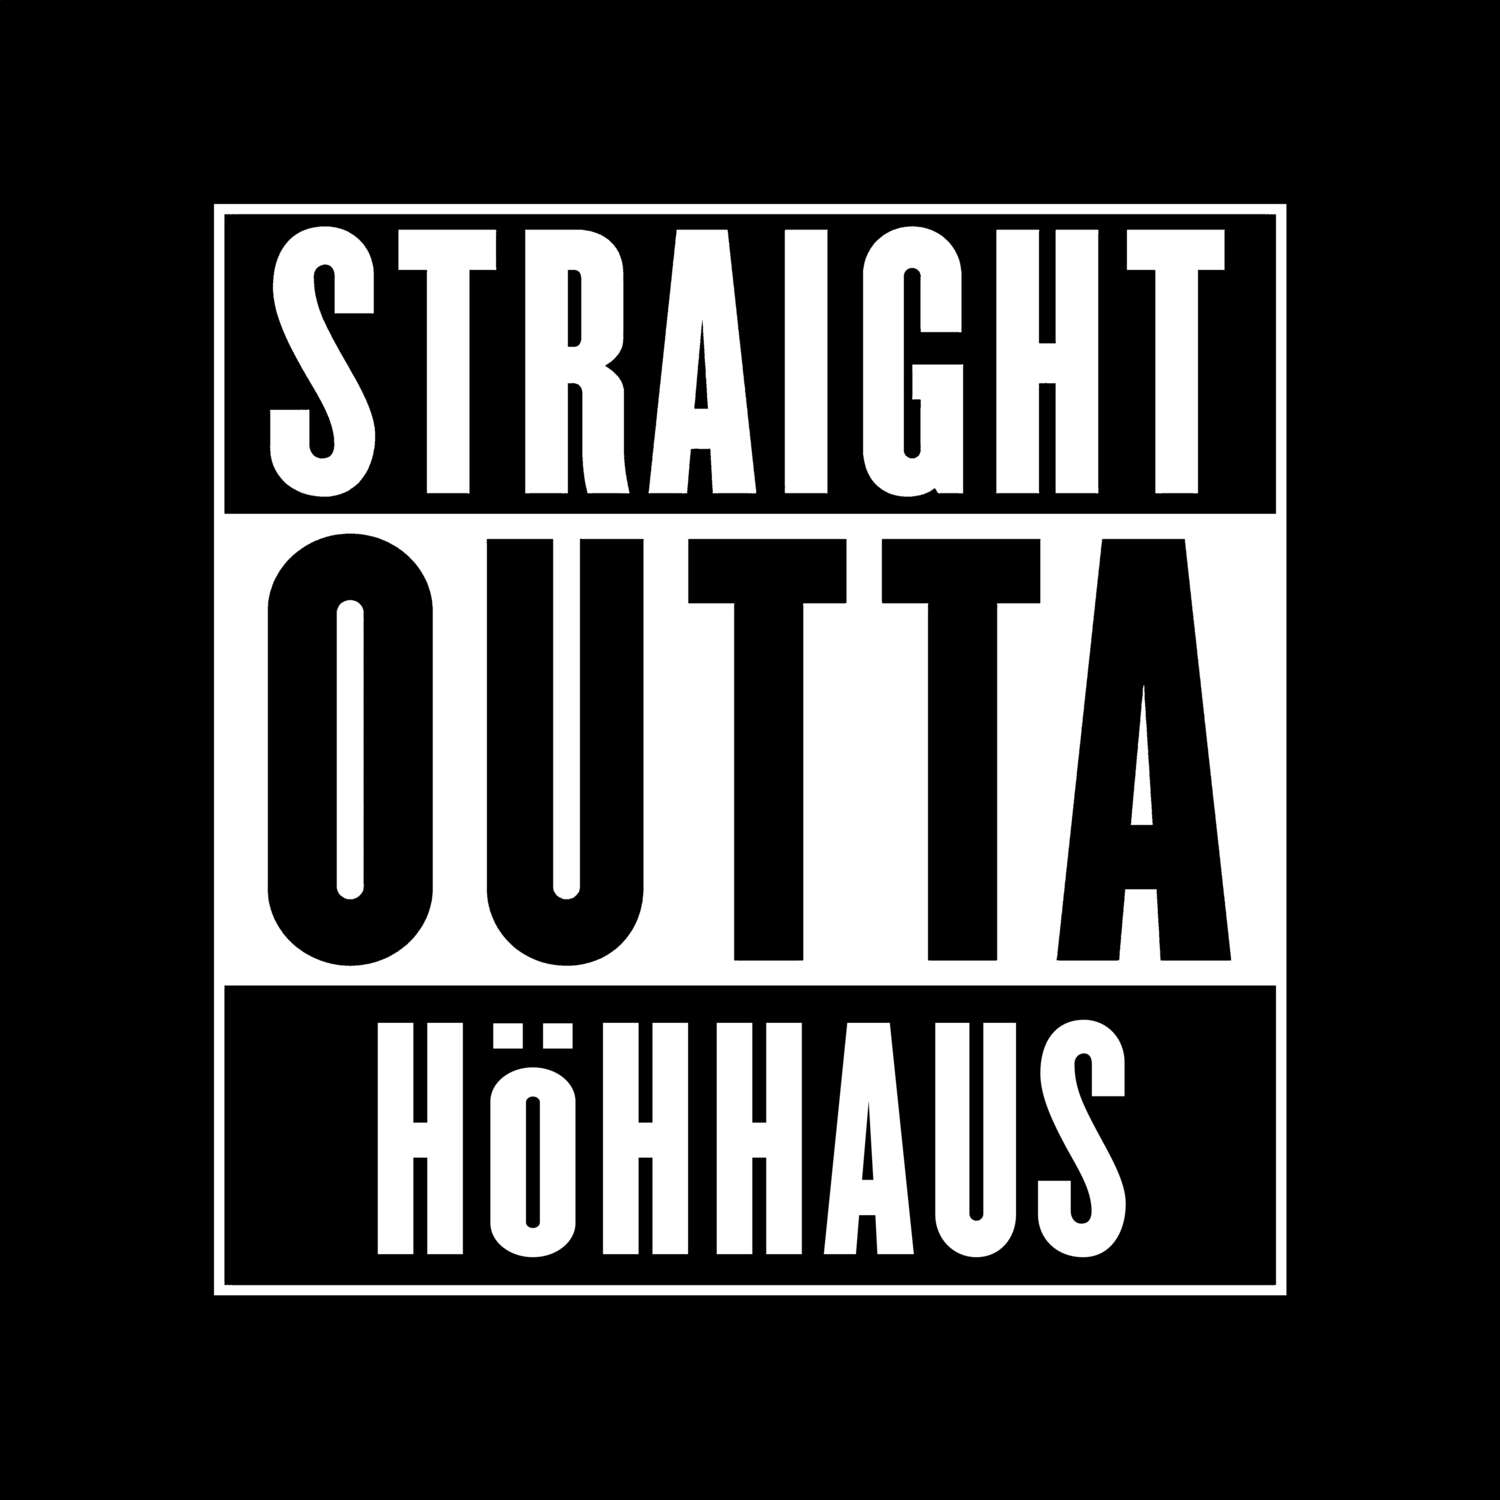 Höhhaus T-Shirt »Straight Outta«